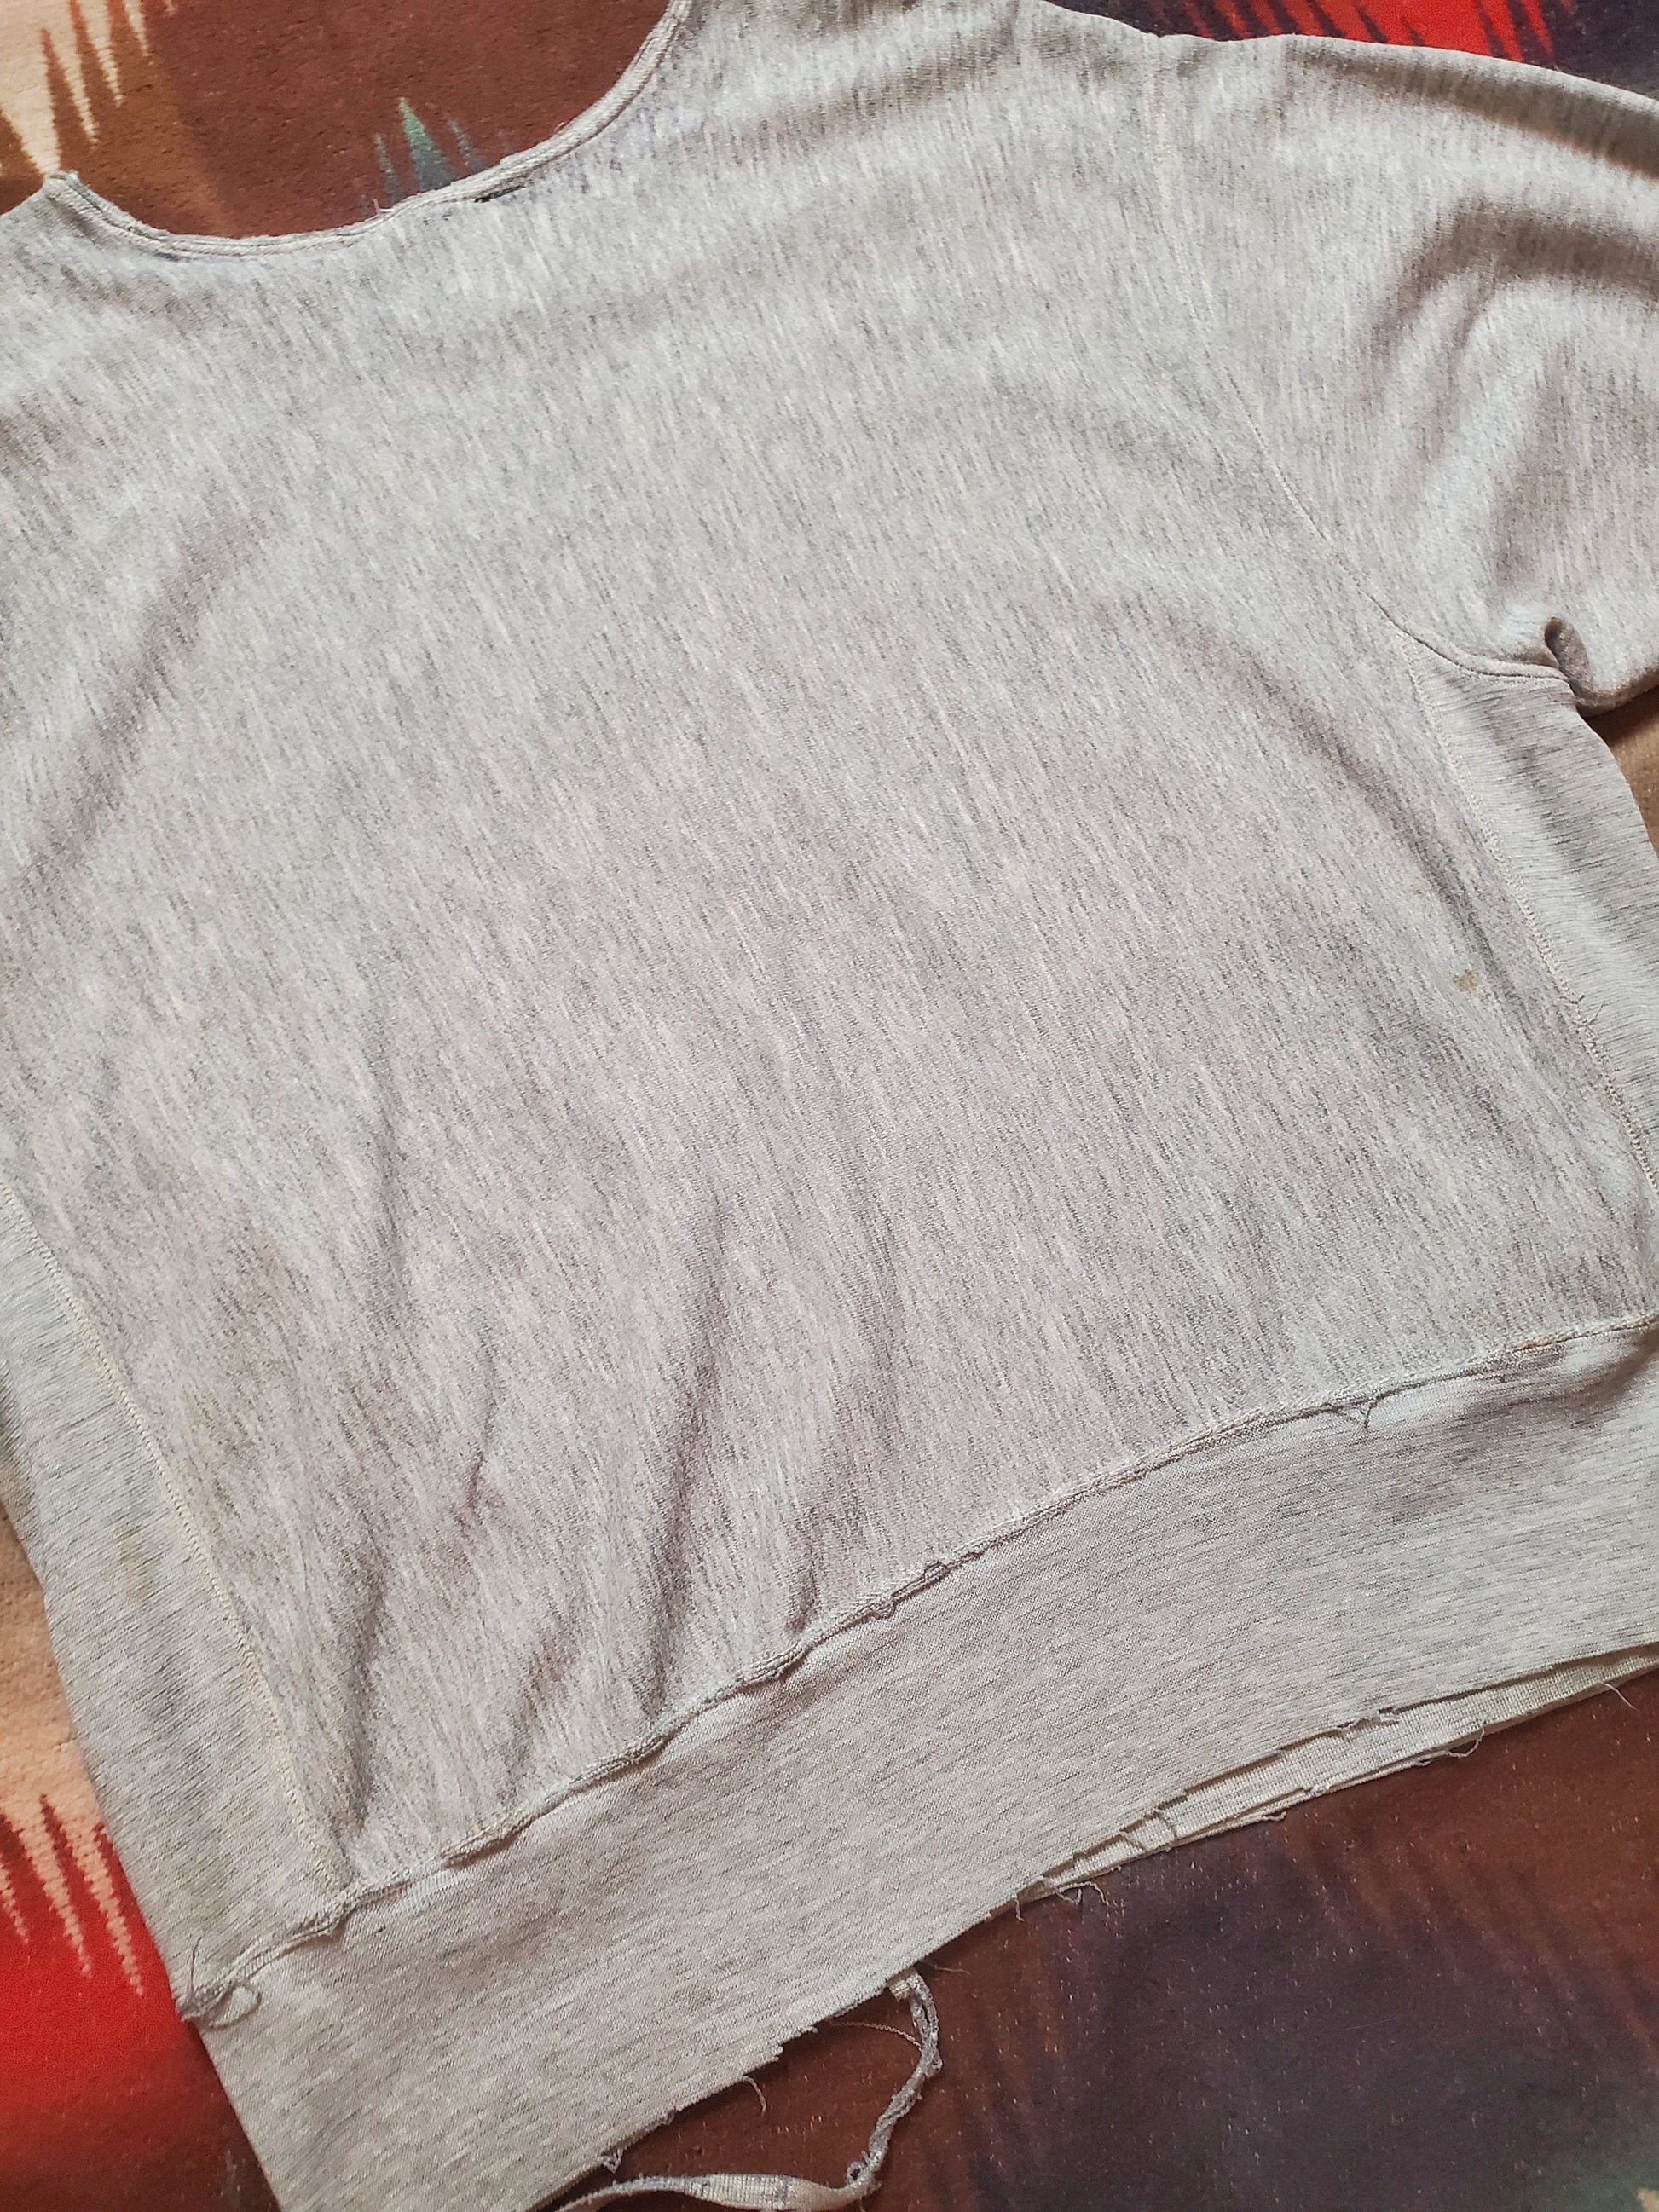 1980s Distressed Chicago Bears Sweatshirt Size XL